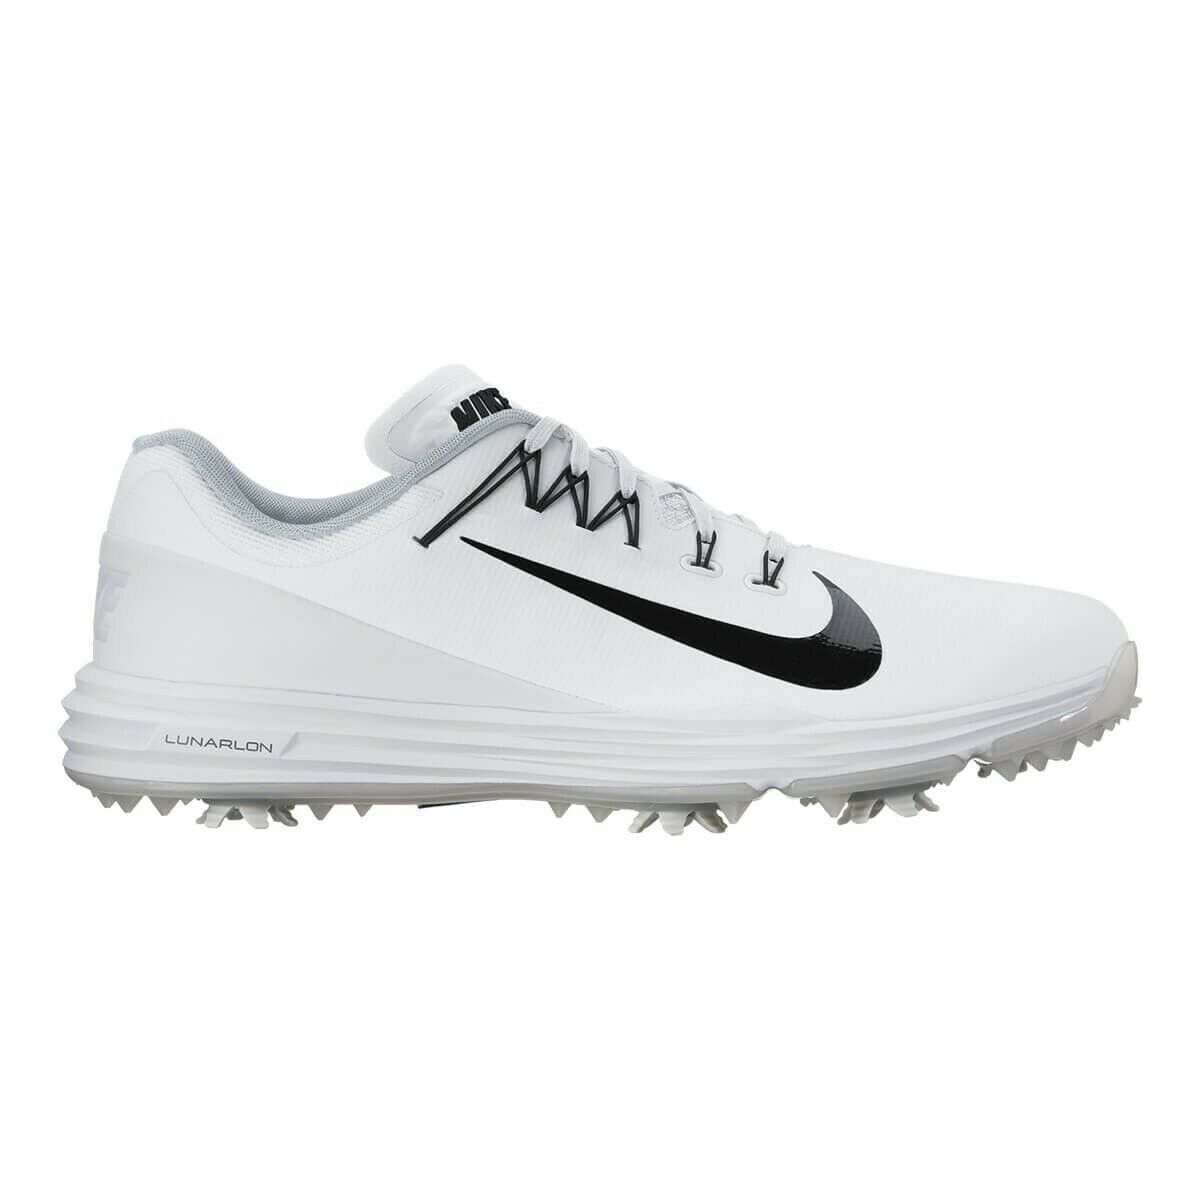 New NIKE GOLF LUNAR/EXPLORER 2 Men's Golfing Shoes Cleats Spikes ...